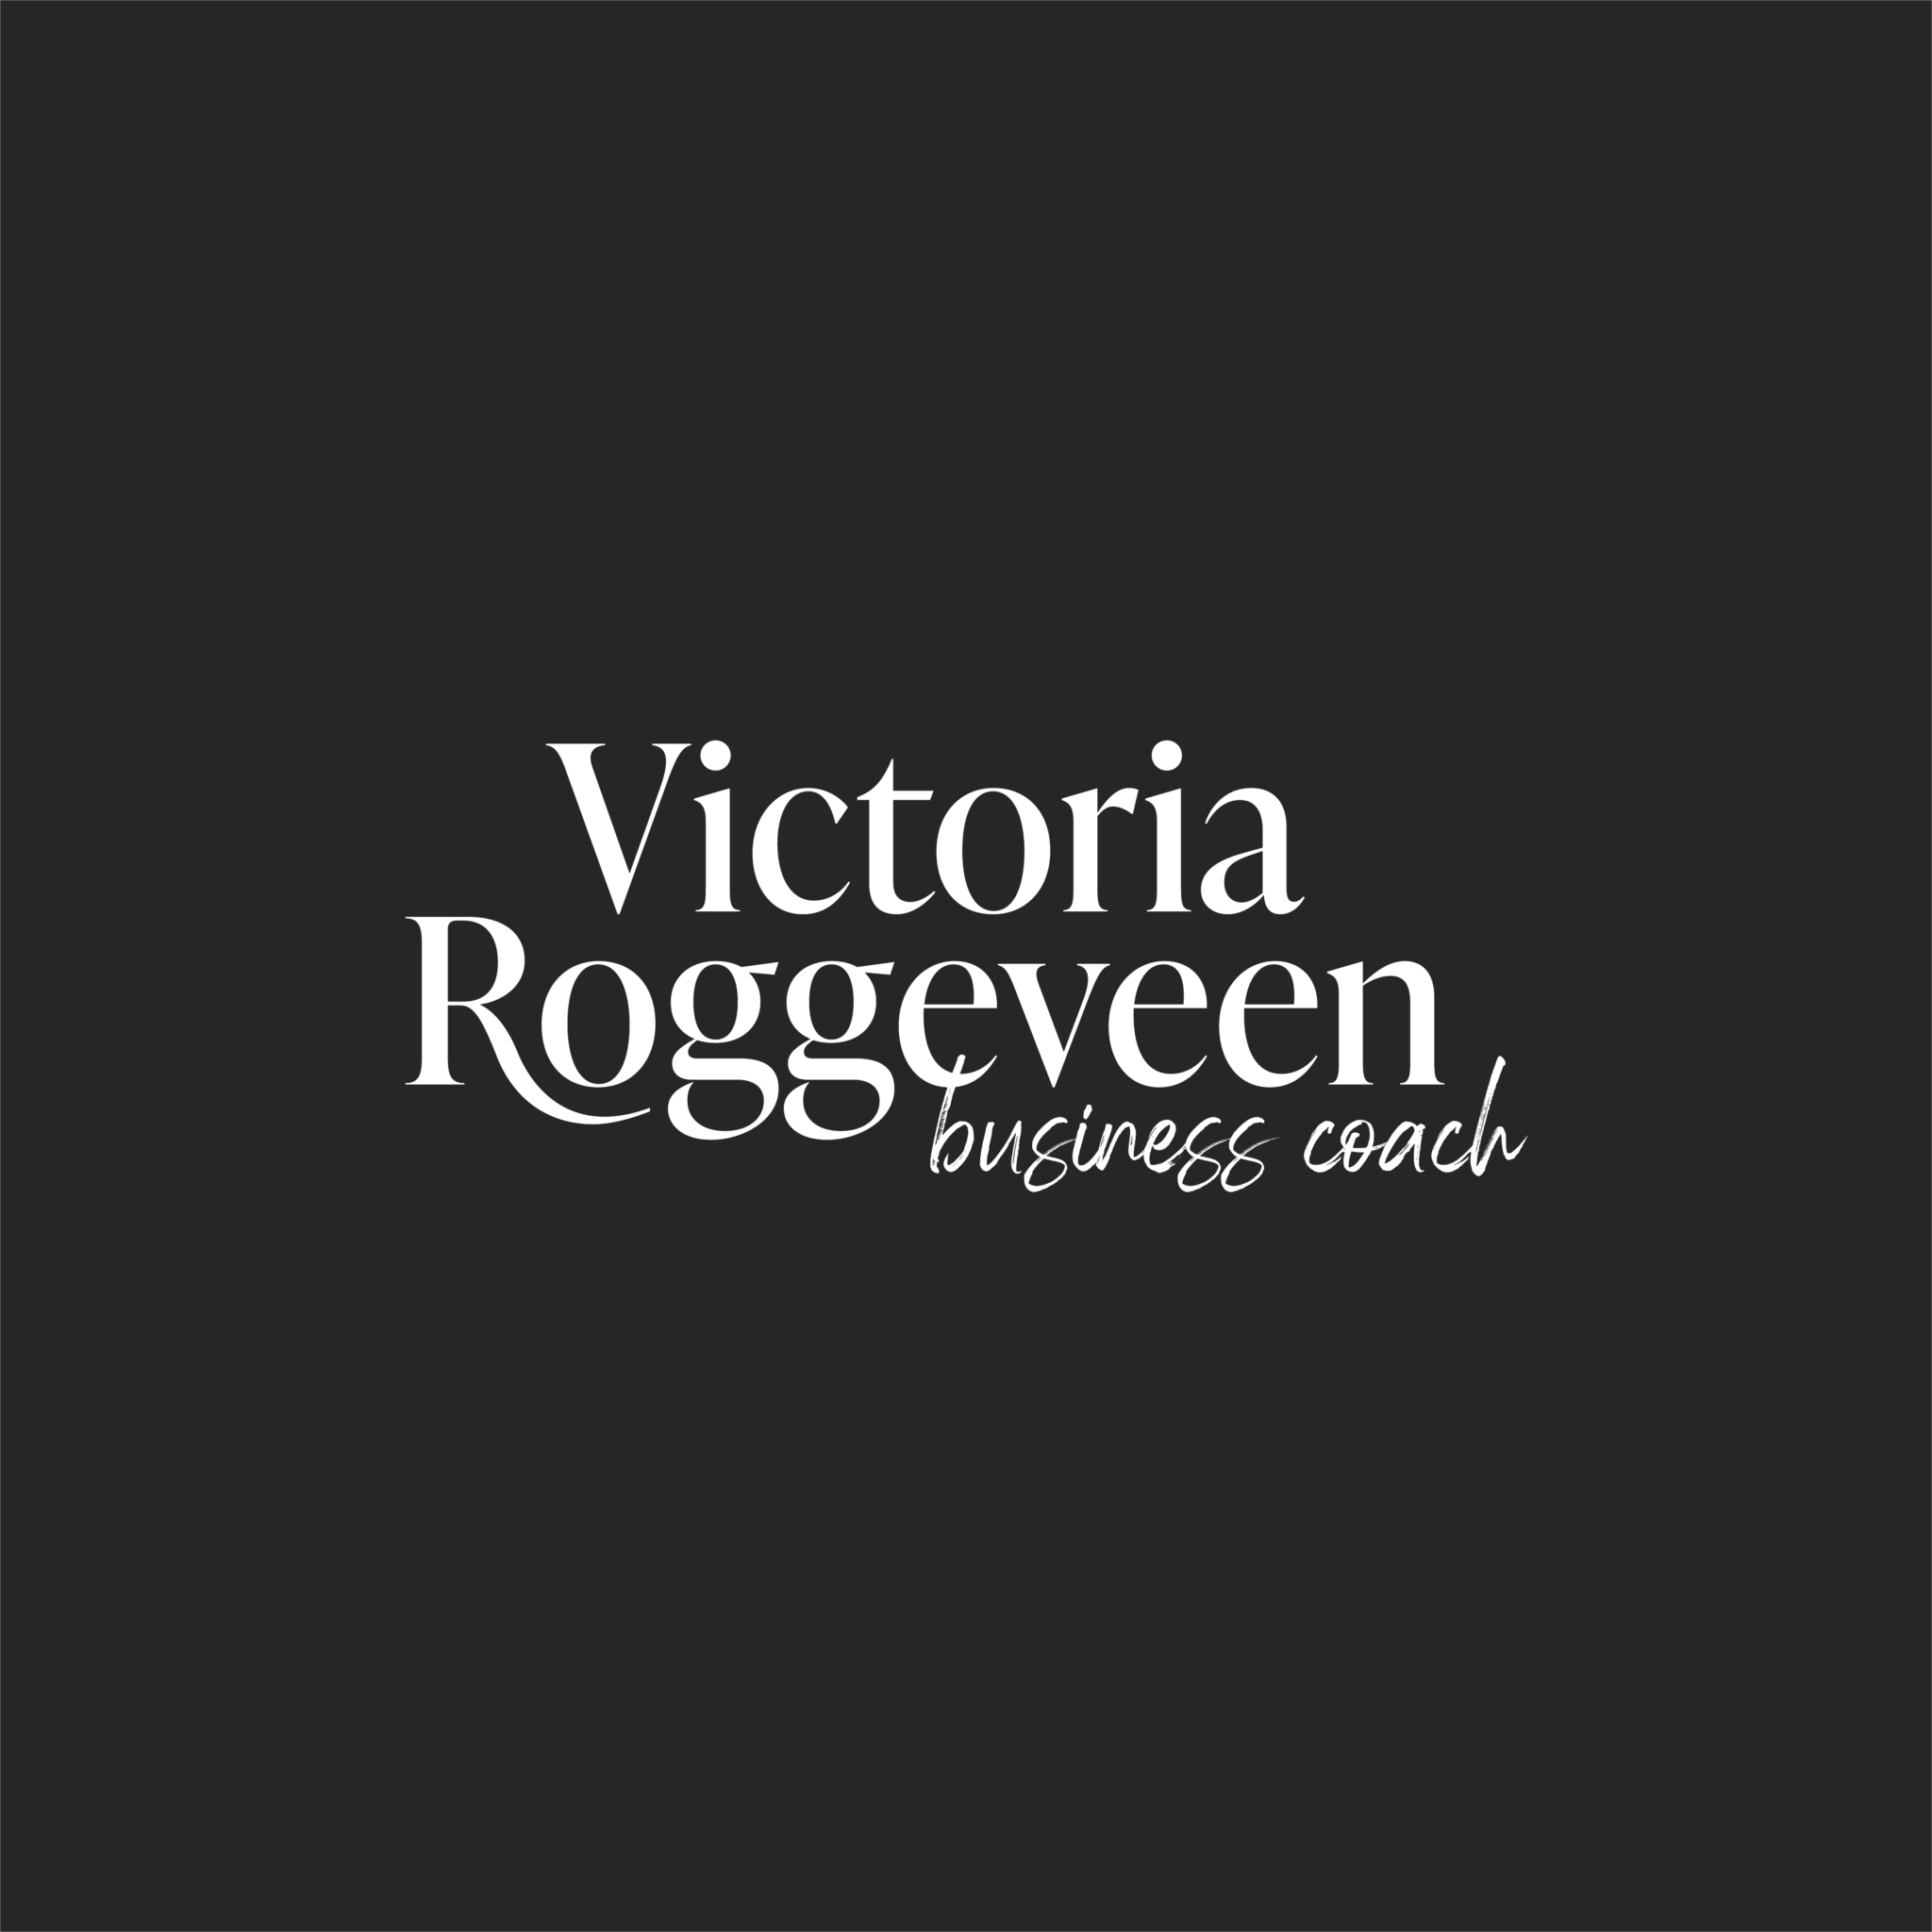 Victoria Roggeveen